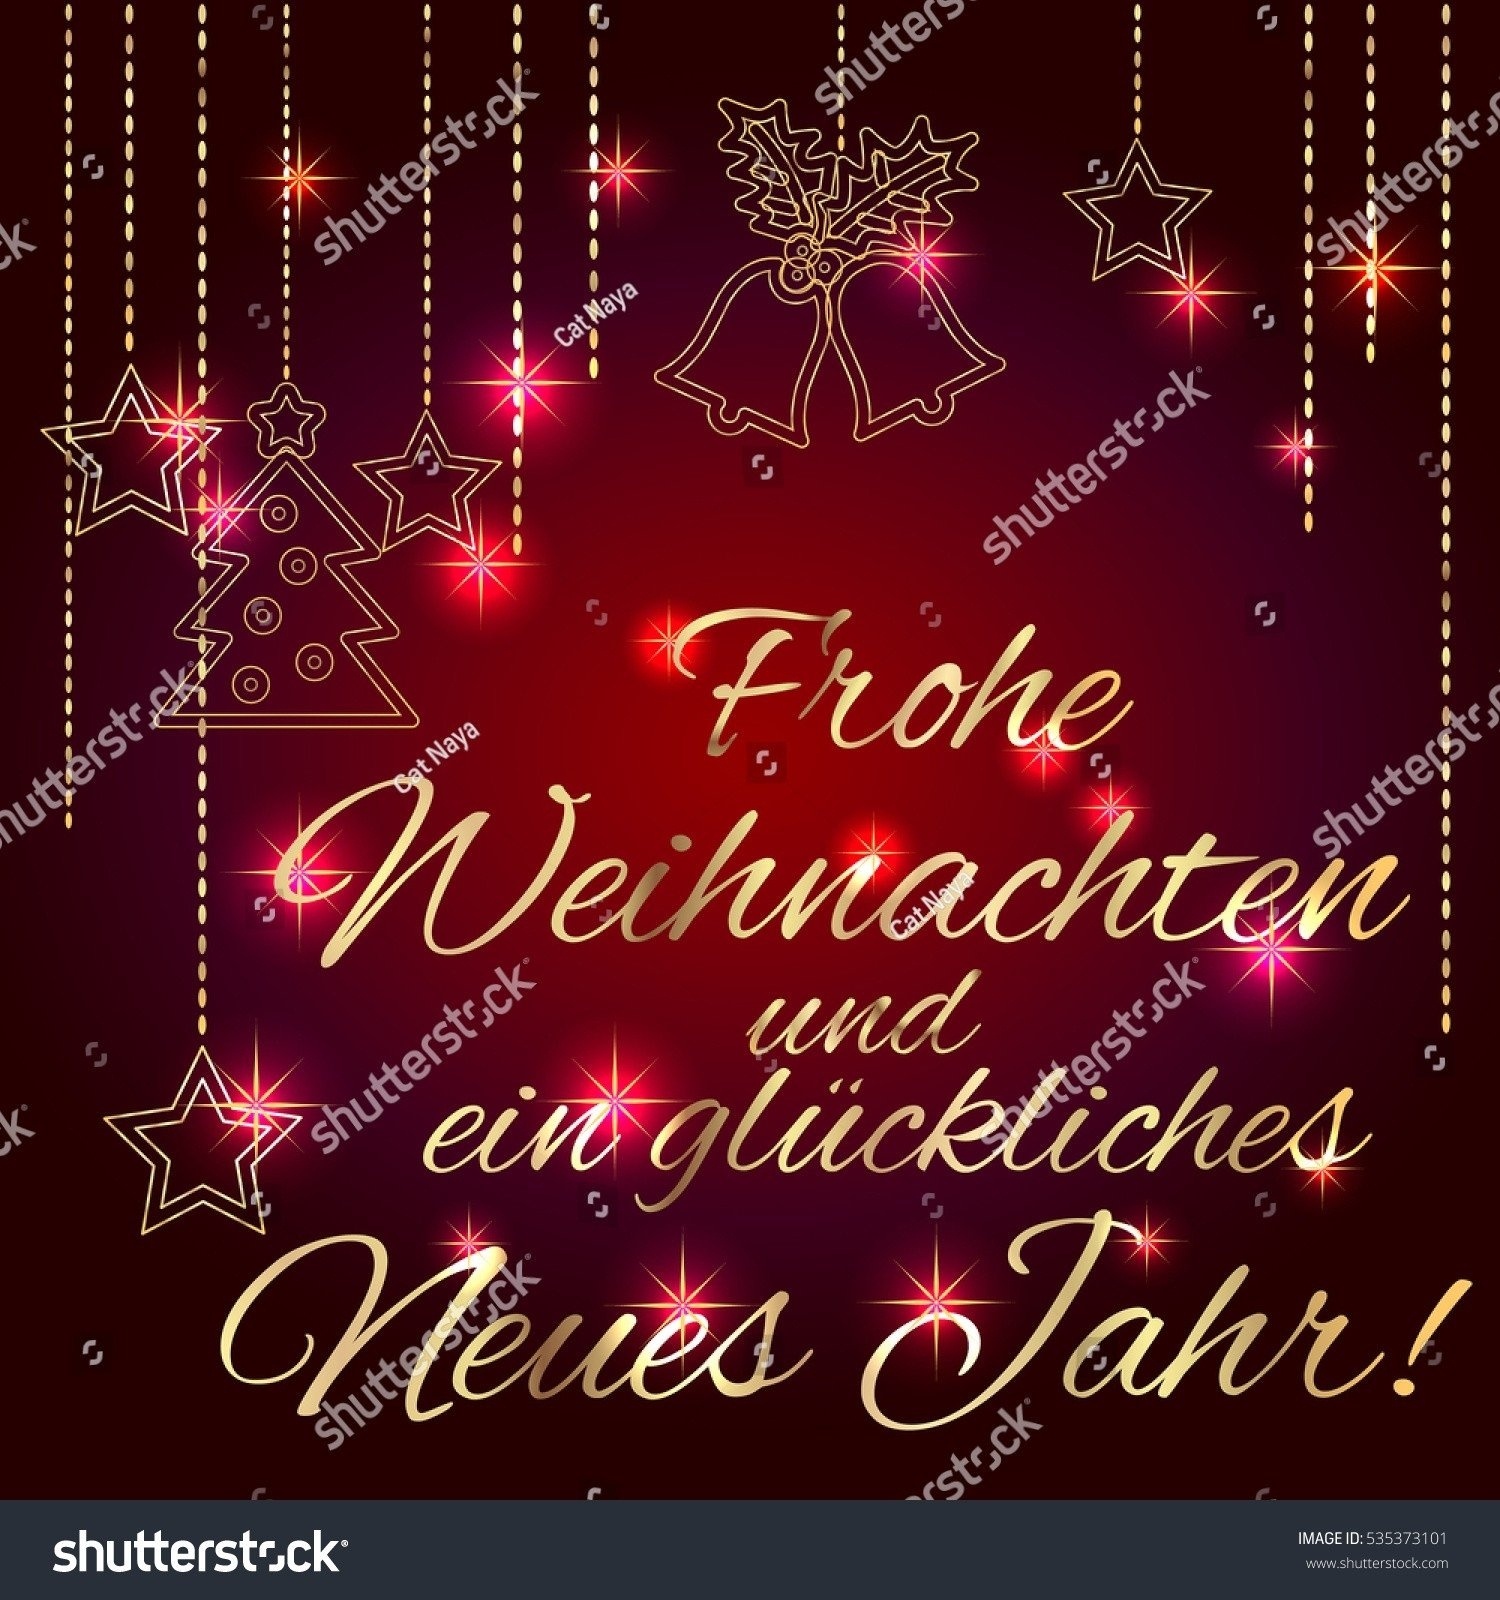 Free Printable German Christmas Cards – Festival Collections - Free Printable German Christmas Cards